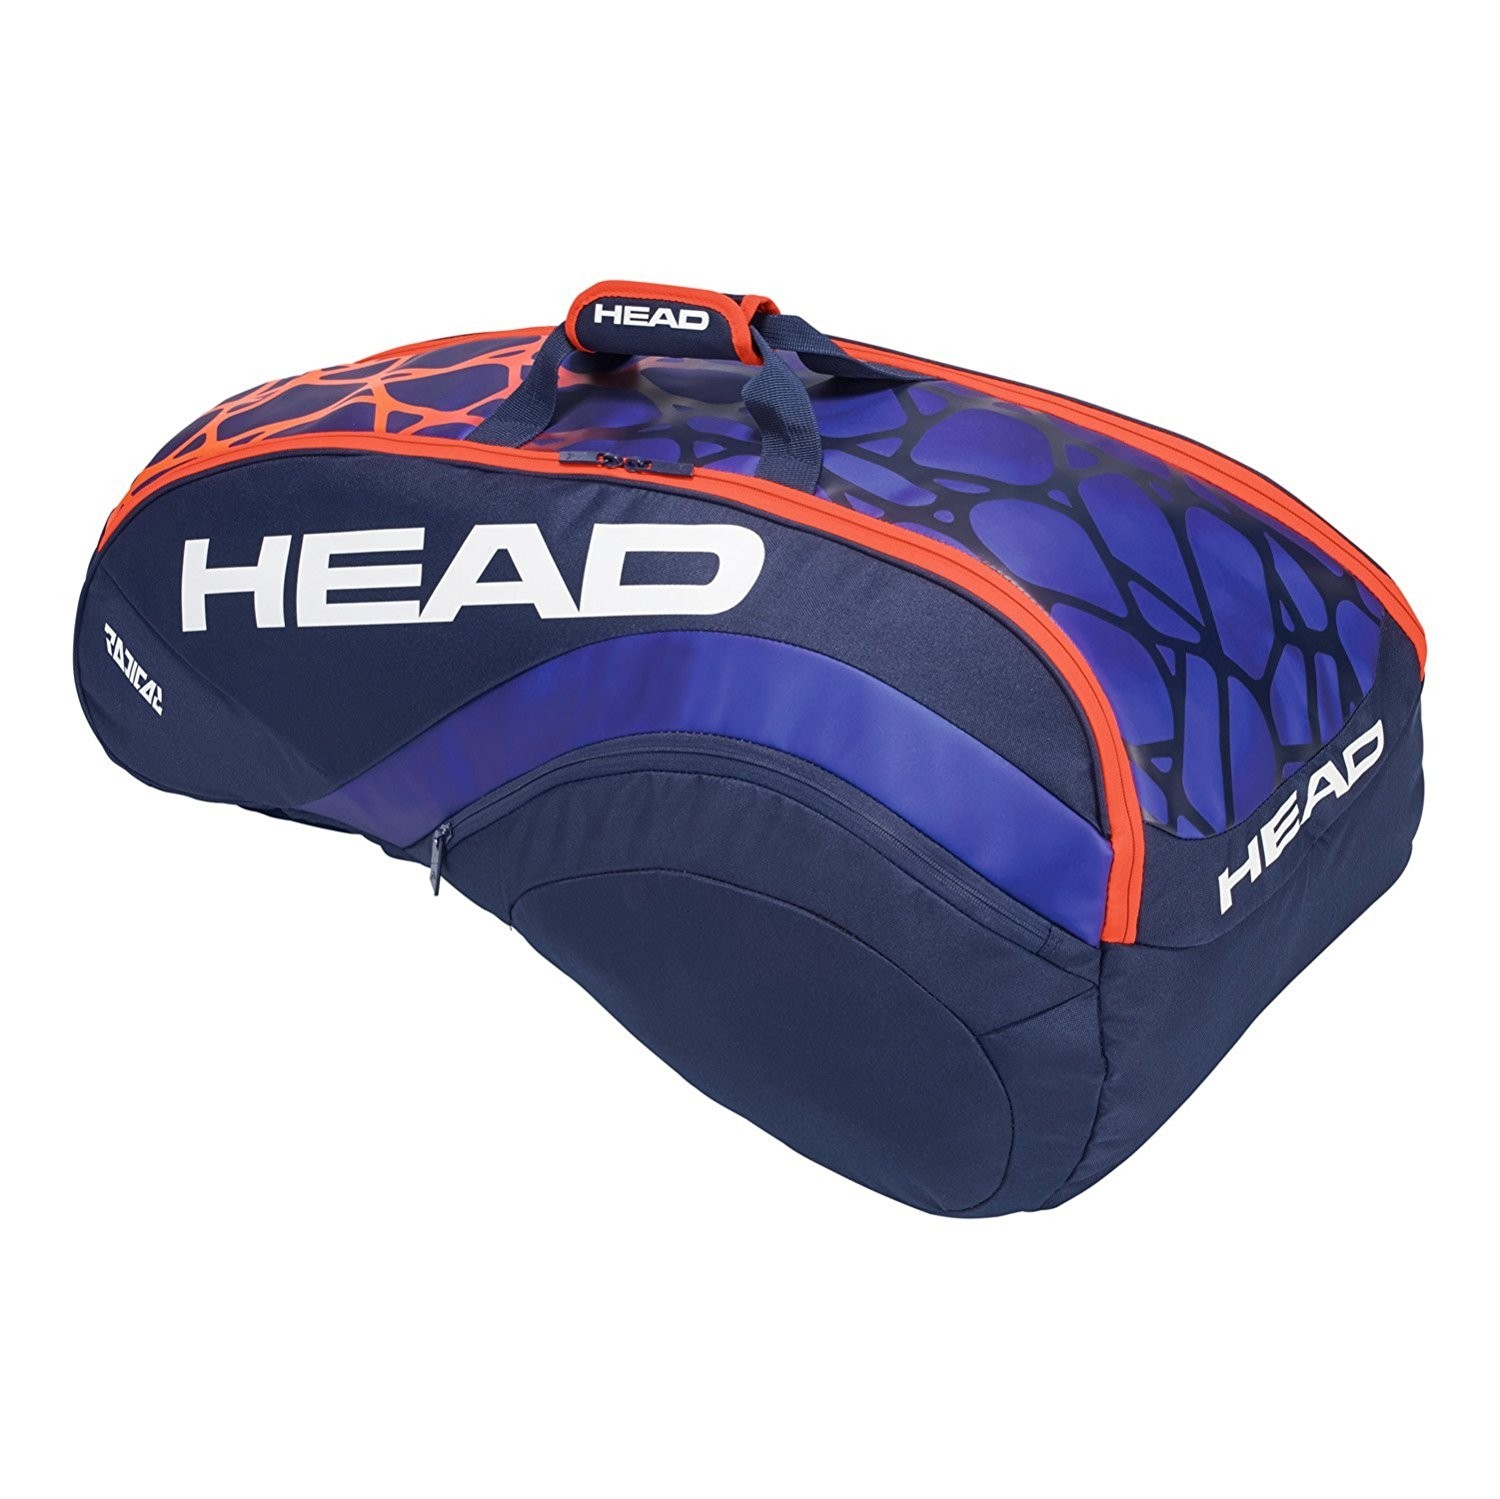 HEAD Radical 9R Supercombi